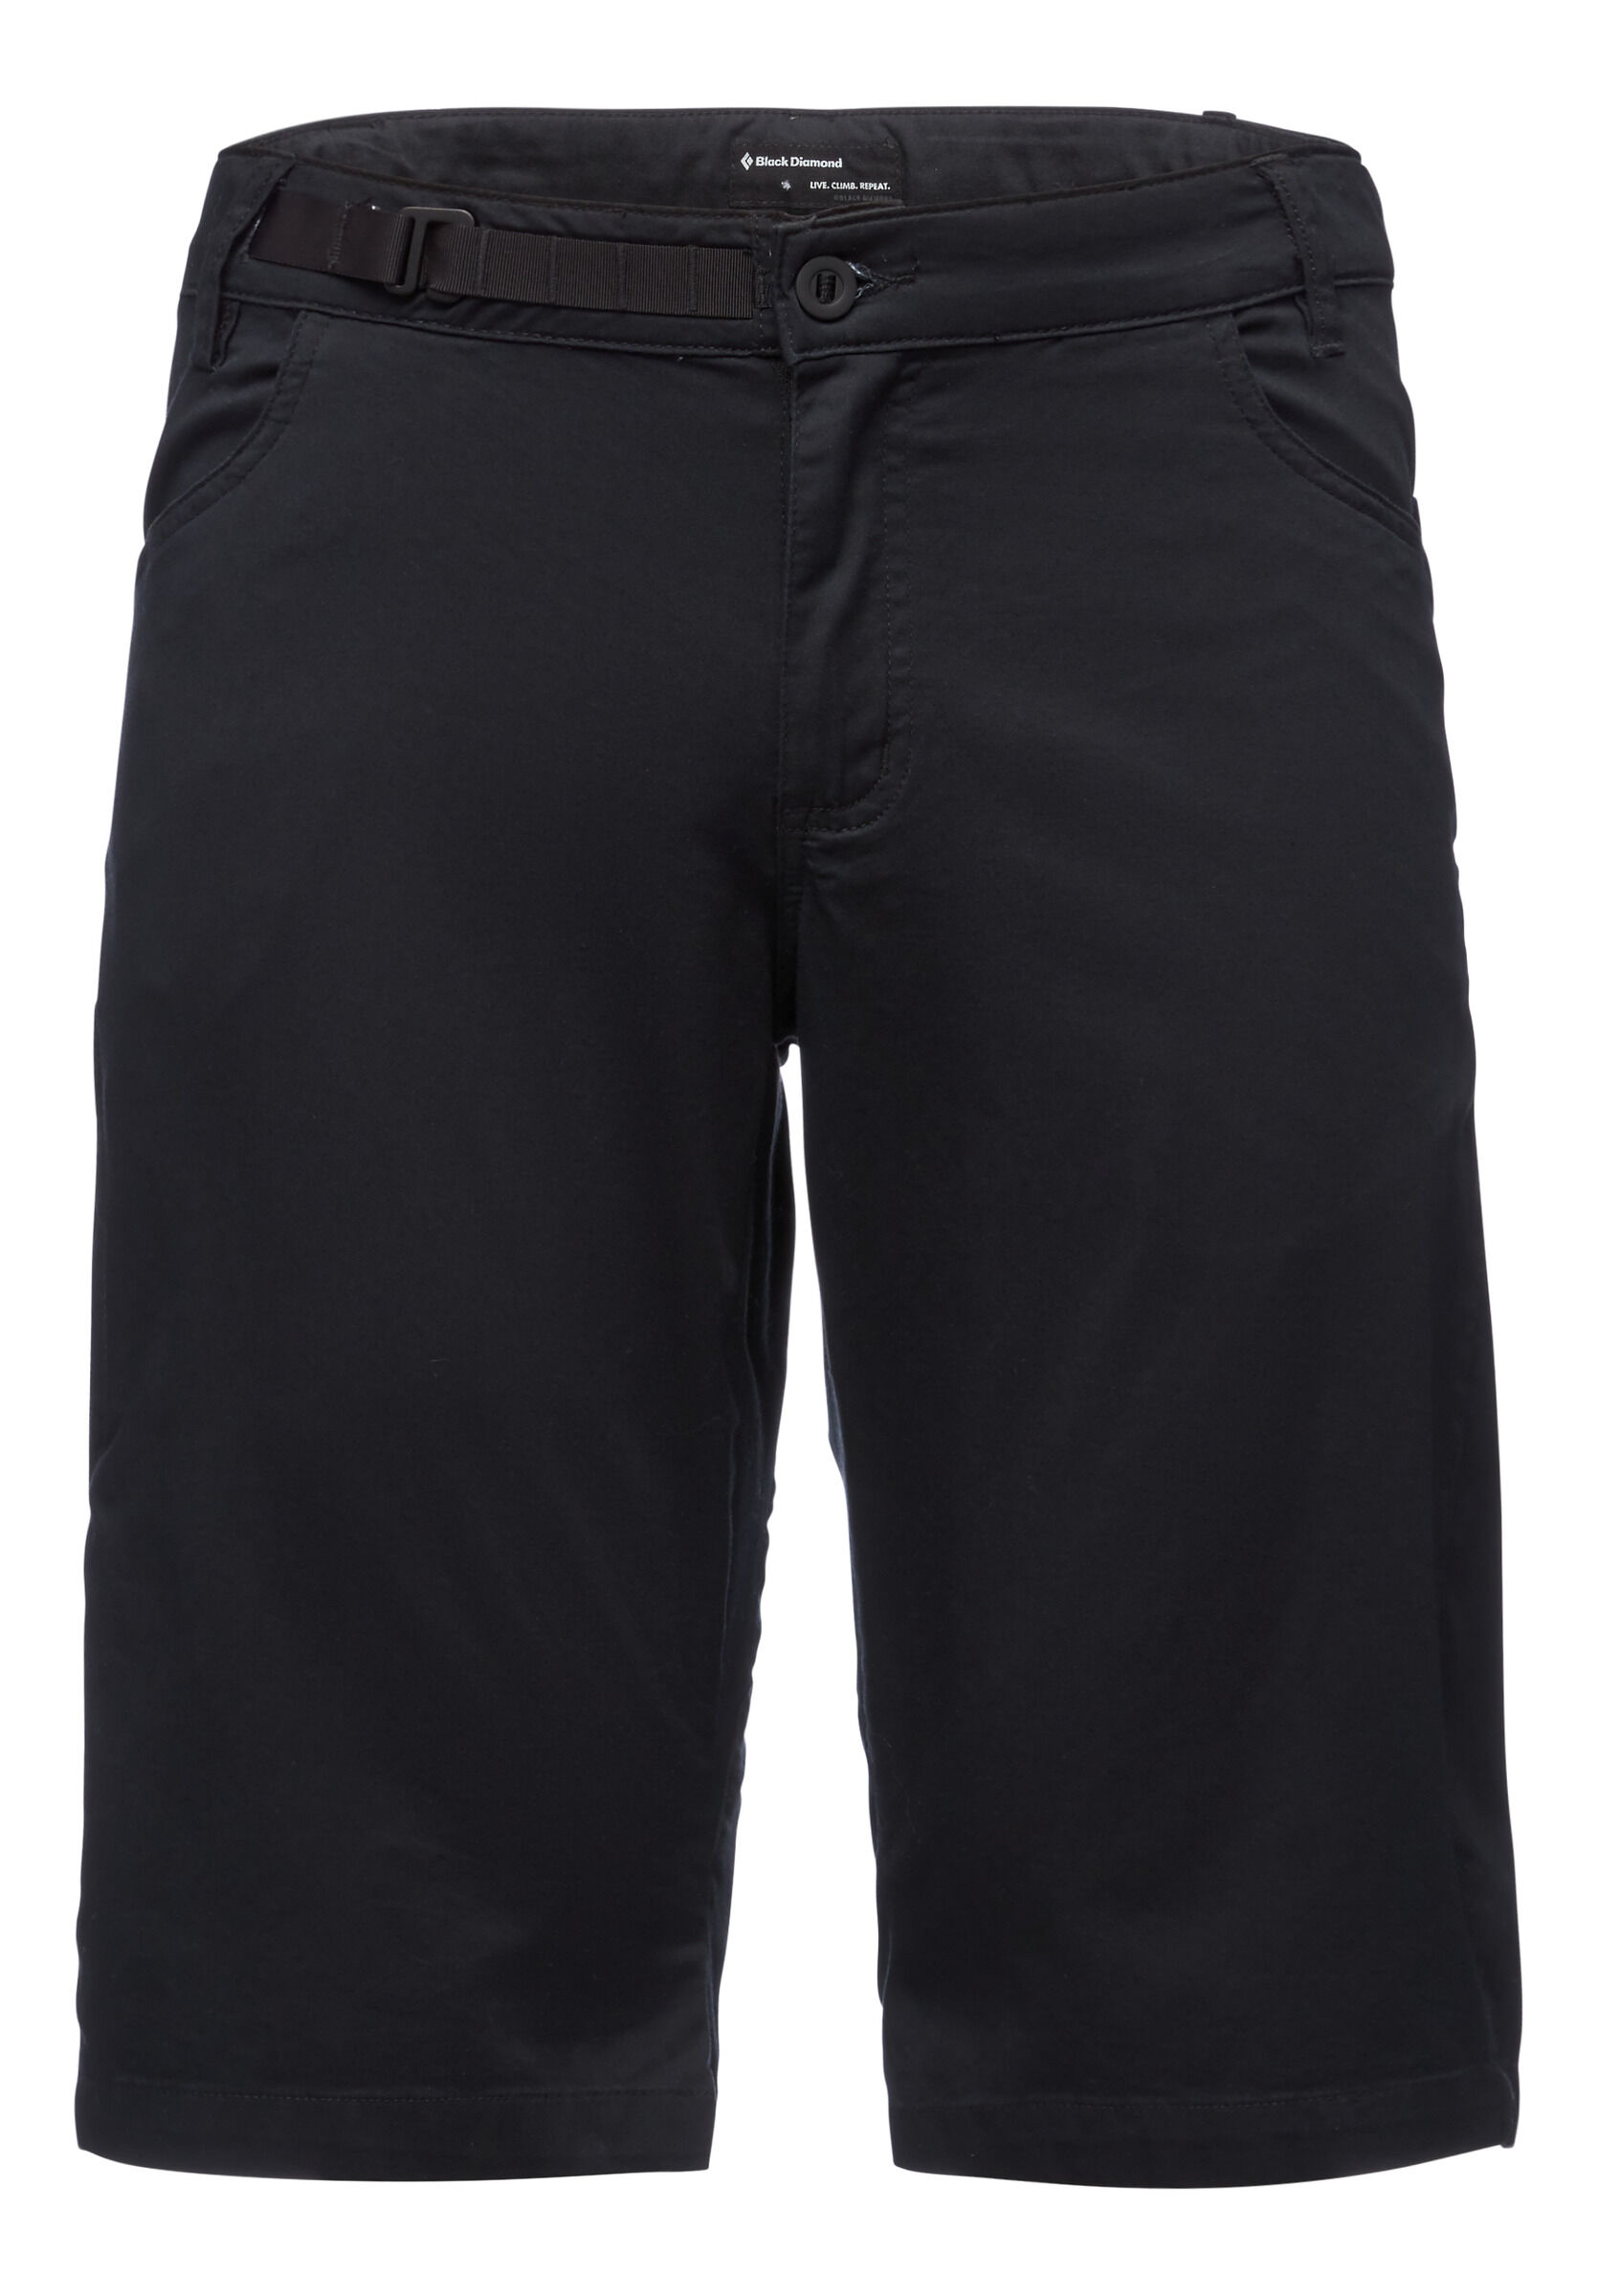 Black Diamond - Credo Shorts - Pantaloni da arrampicata - Uomo